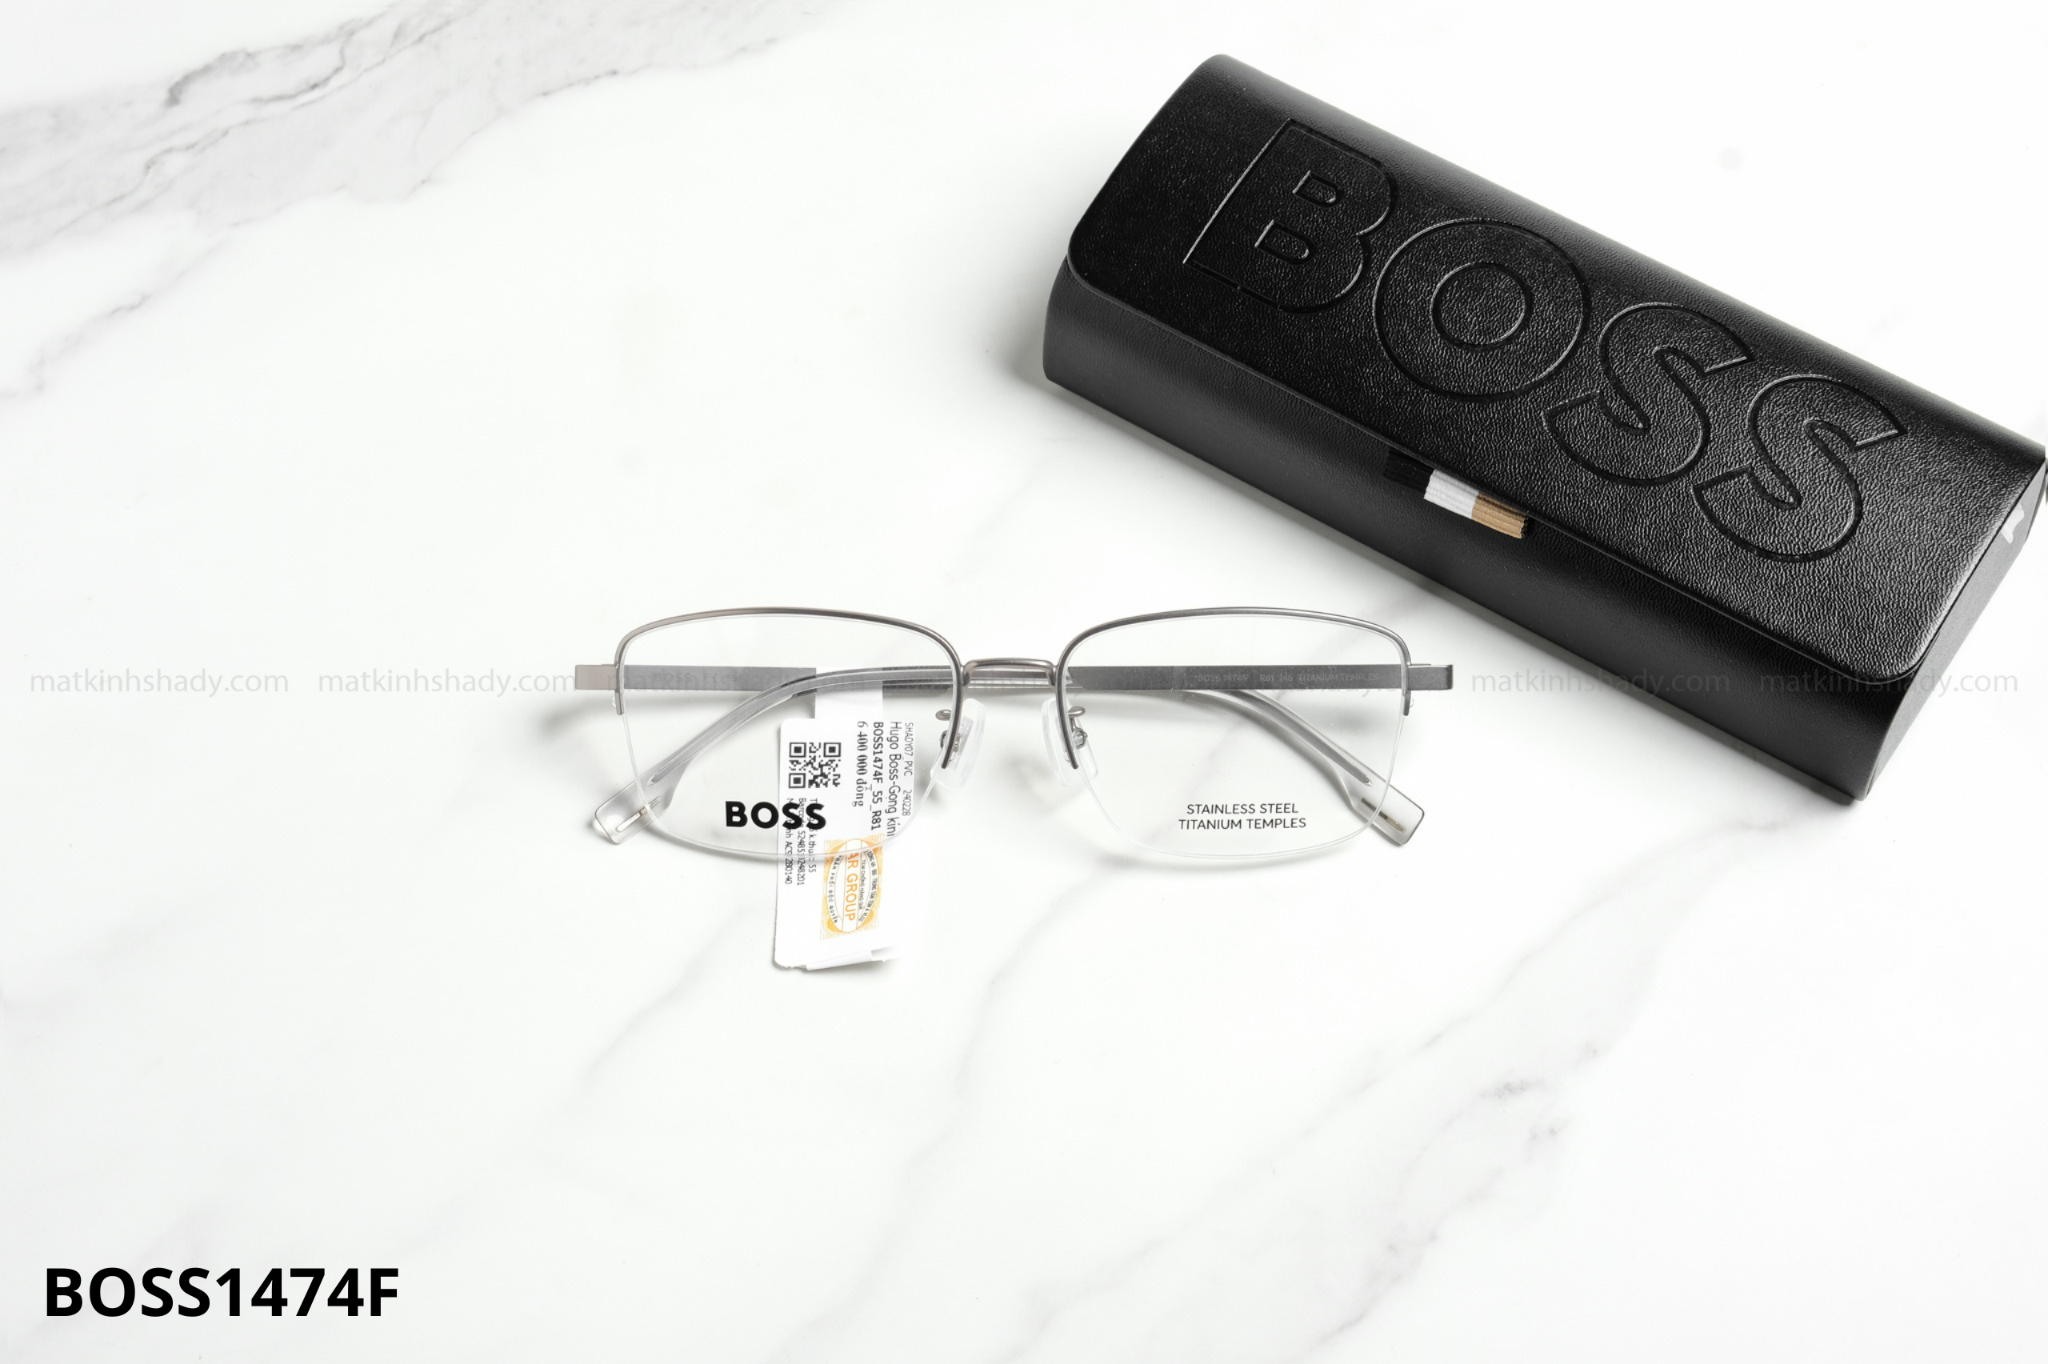  Boss Eyewear - Glasses - Boss1474F 